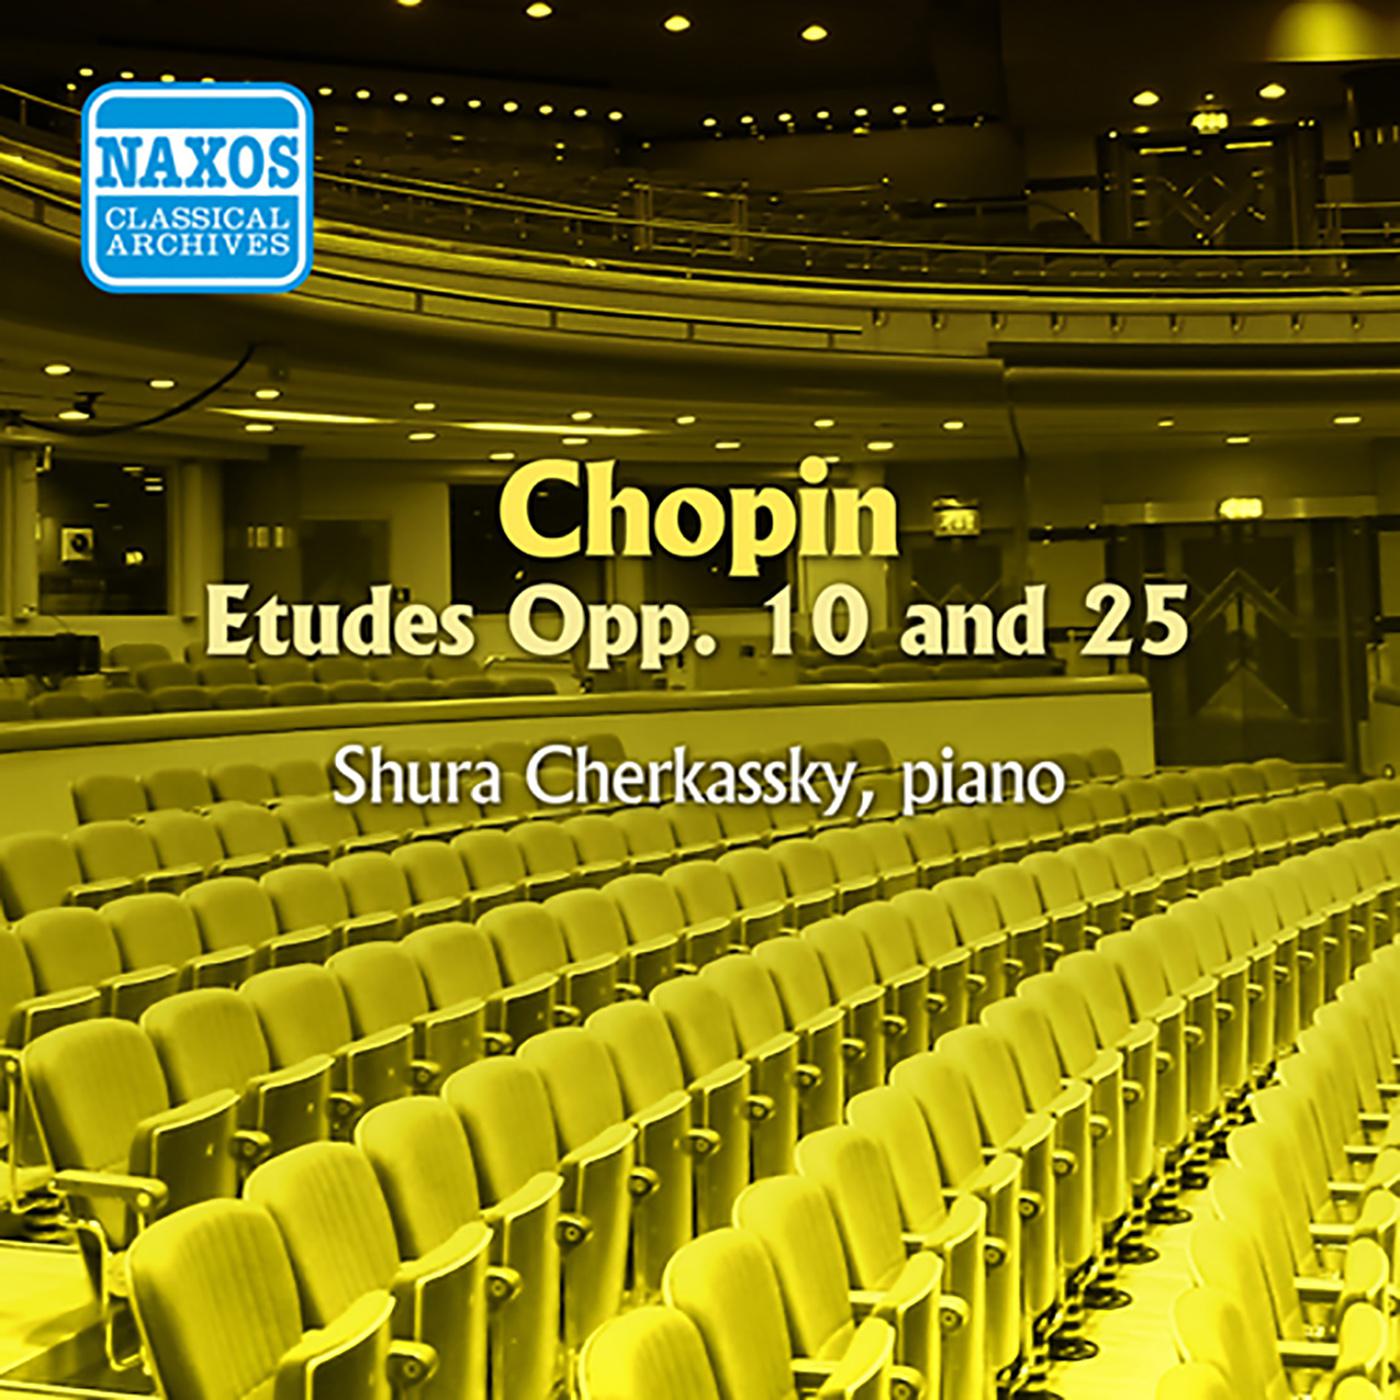 CHOPIN: Etudes, Opp. 10 and 25 (Cherkassky) (1955)